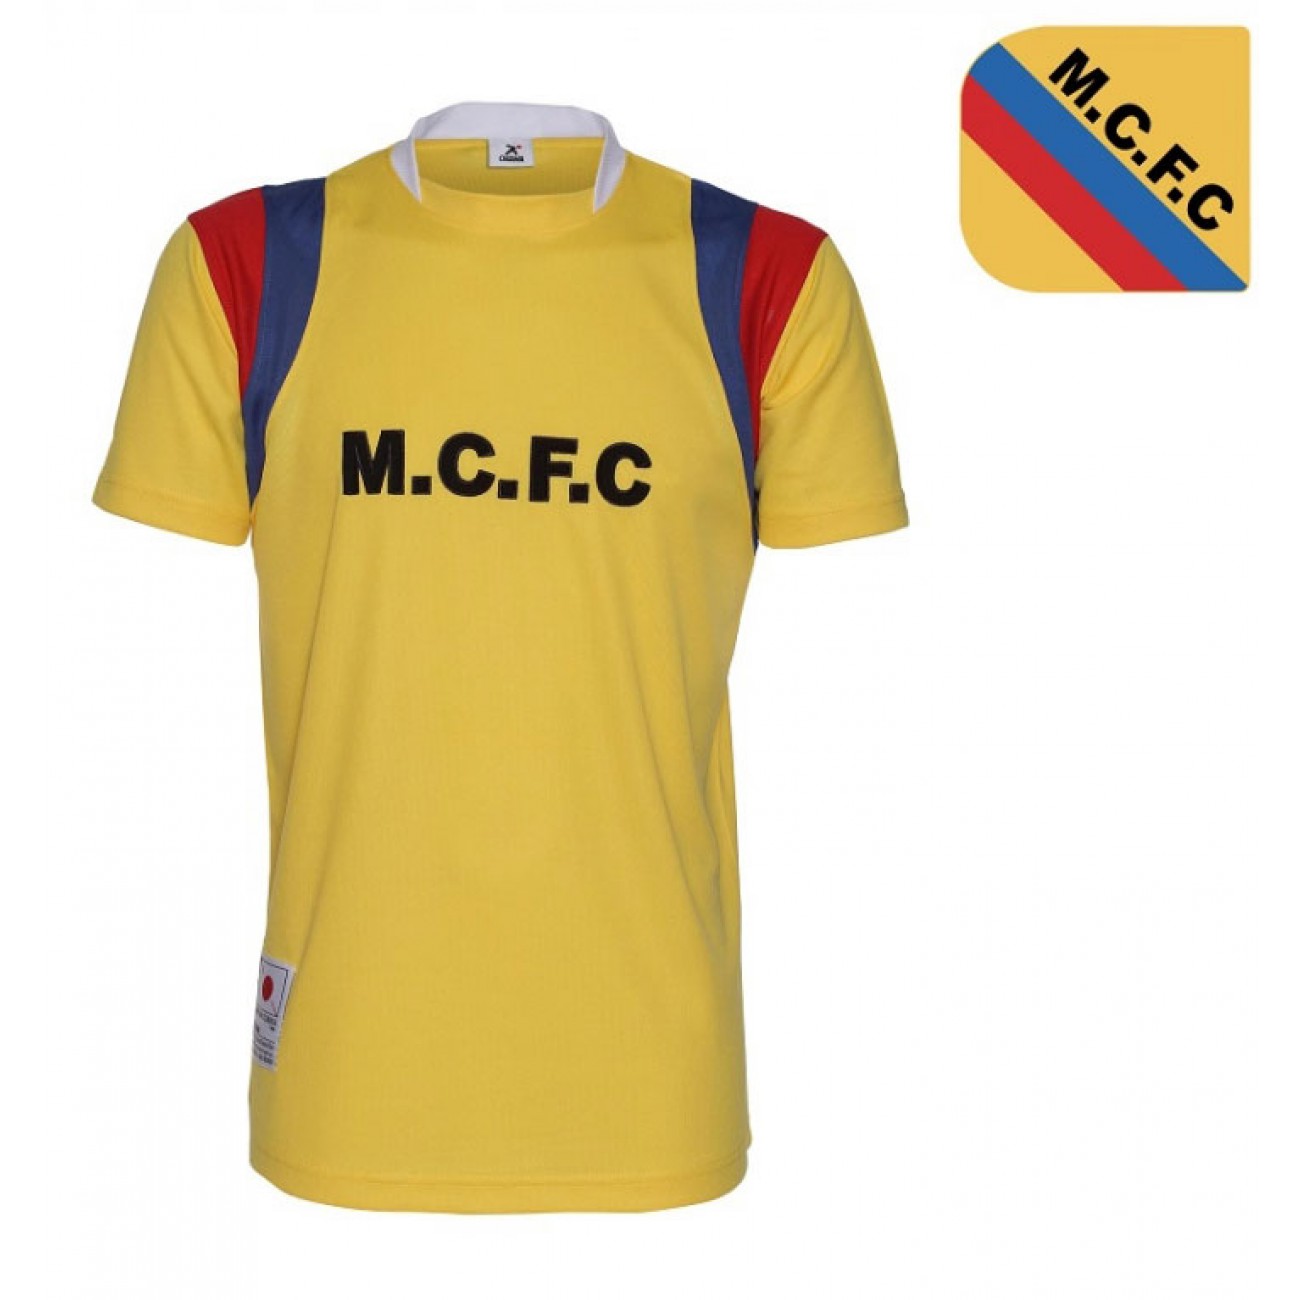 http://www.retrofootball.es/ropa-de-futbol/camiseta-mambo-fc-sport.html